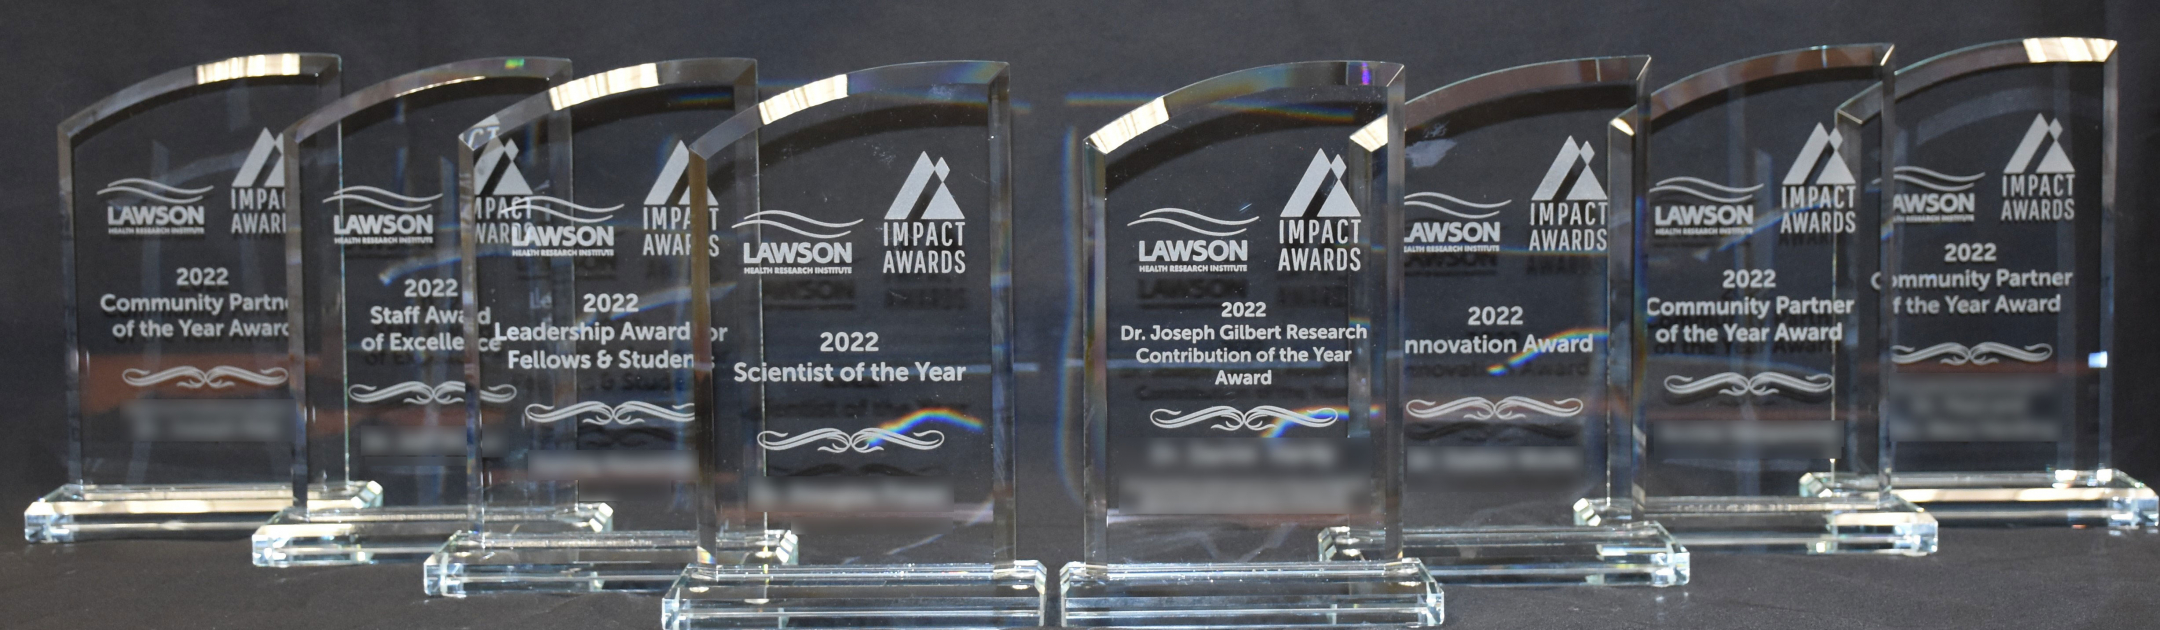 Lawson Impact Awards statuettes